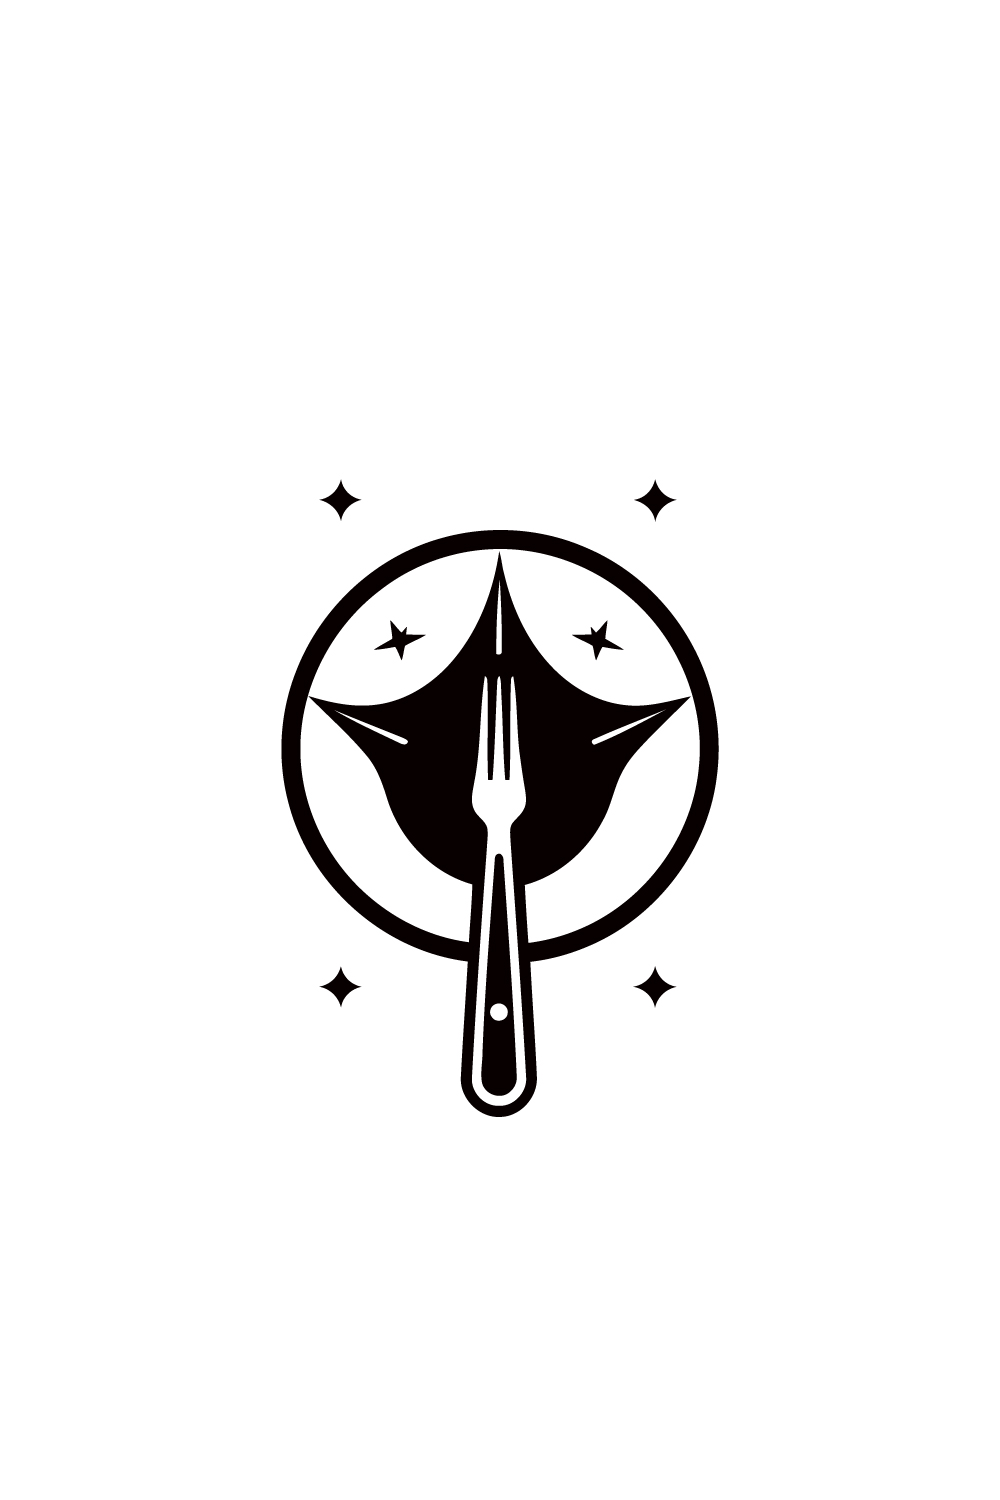 spoon stars logo design pinterest preview image.